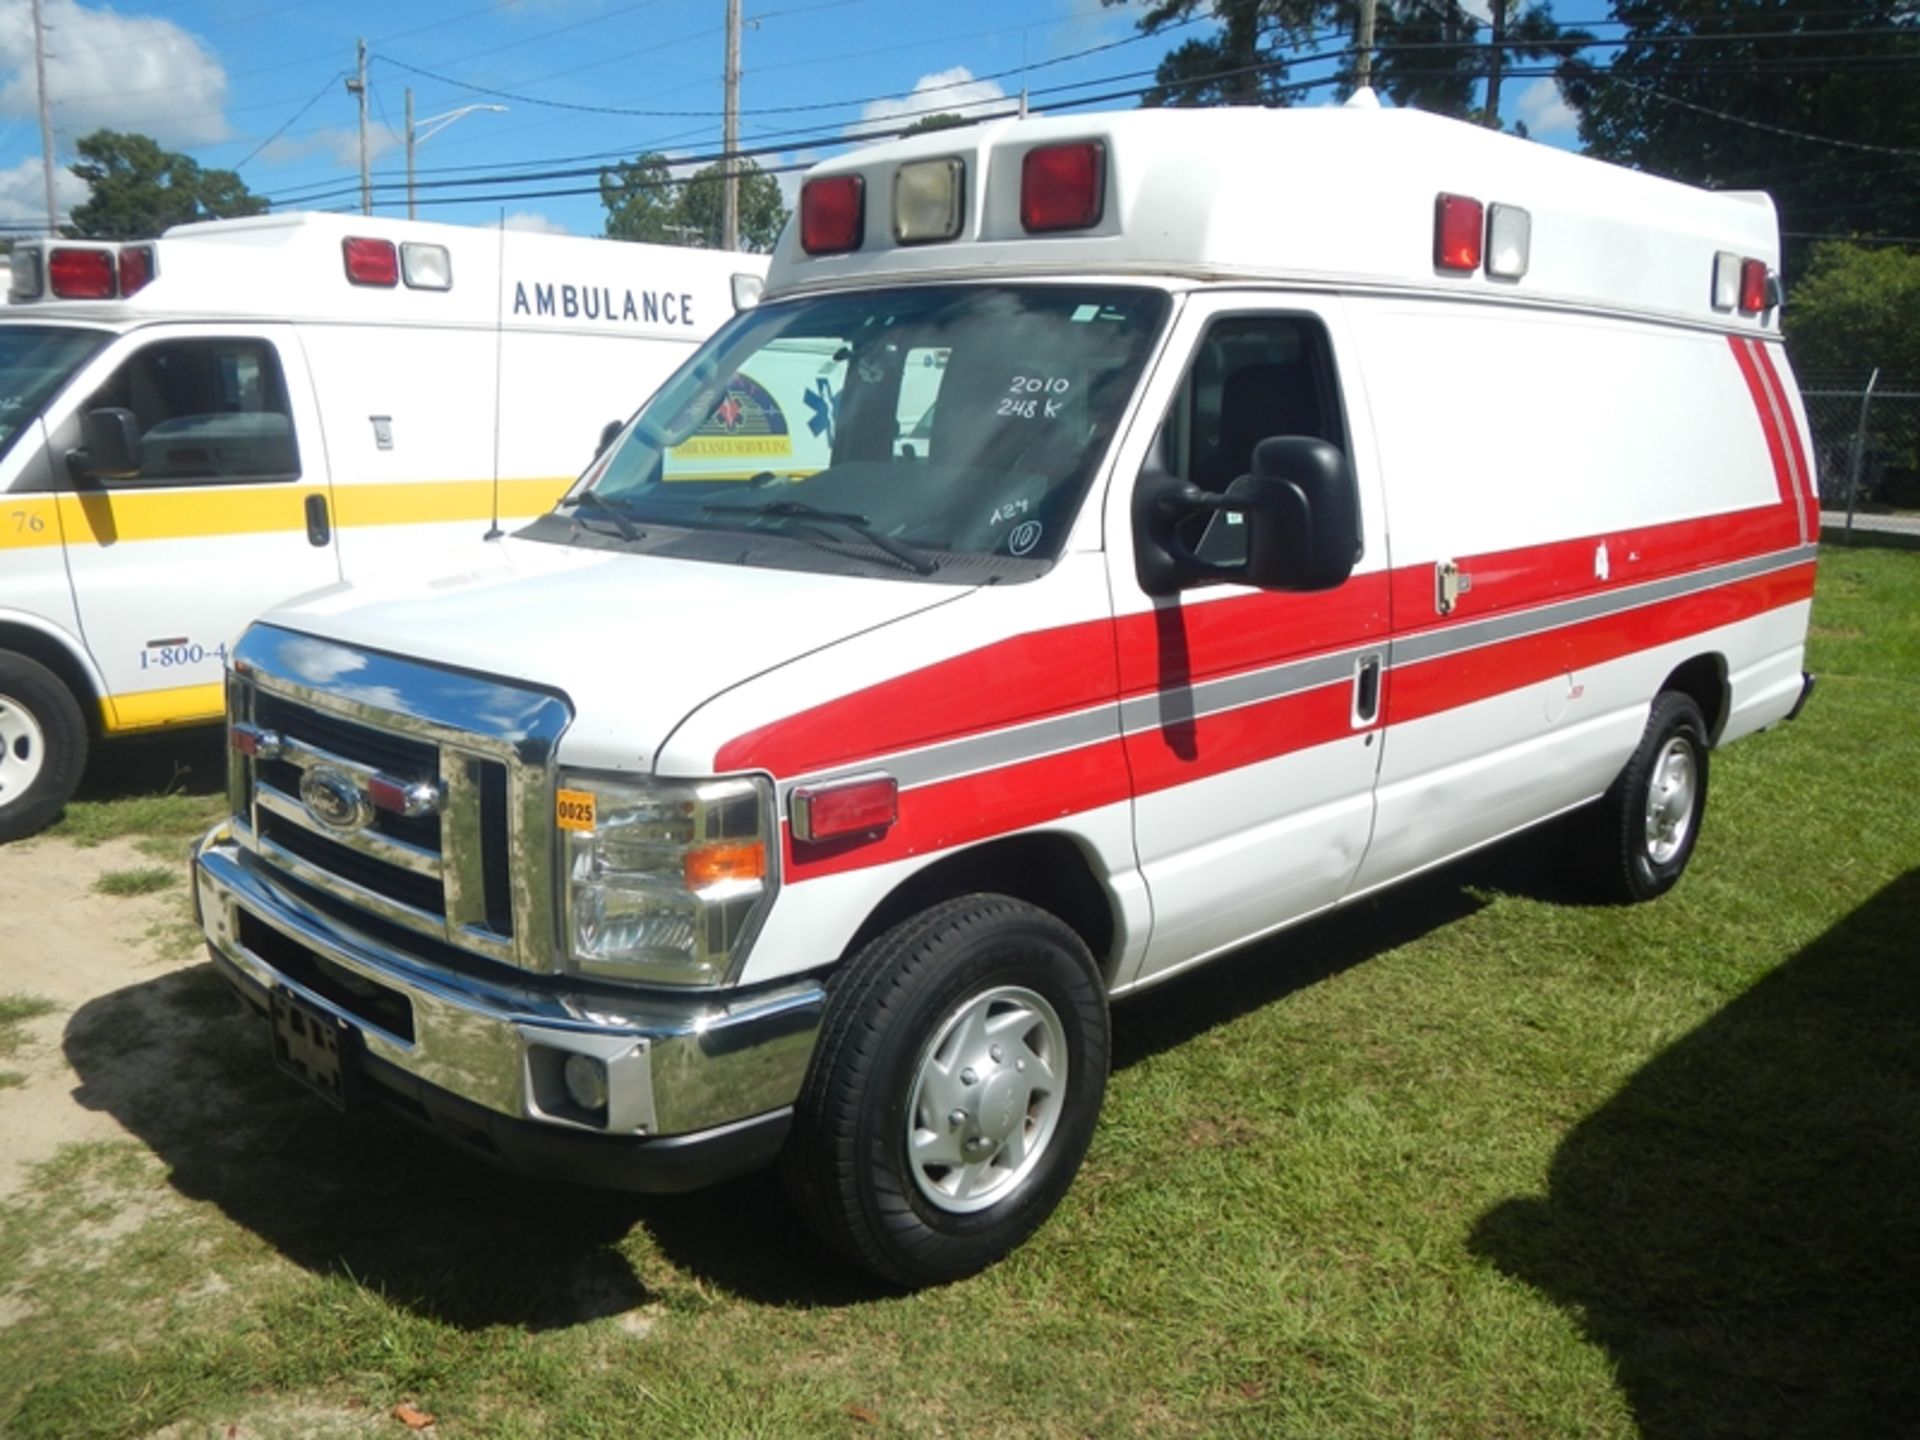 2010 FORD E-350 Super Duty Type II Ambulance, dsl 248,059 miles - VIN: 1FDSS3EP8ADA23977